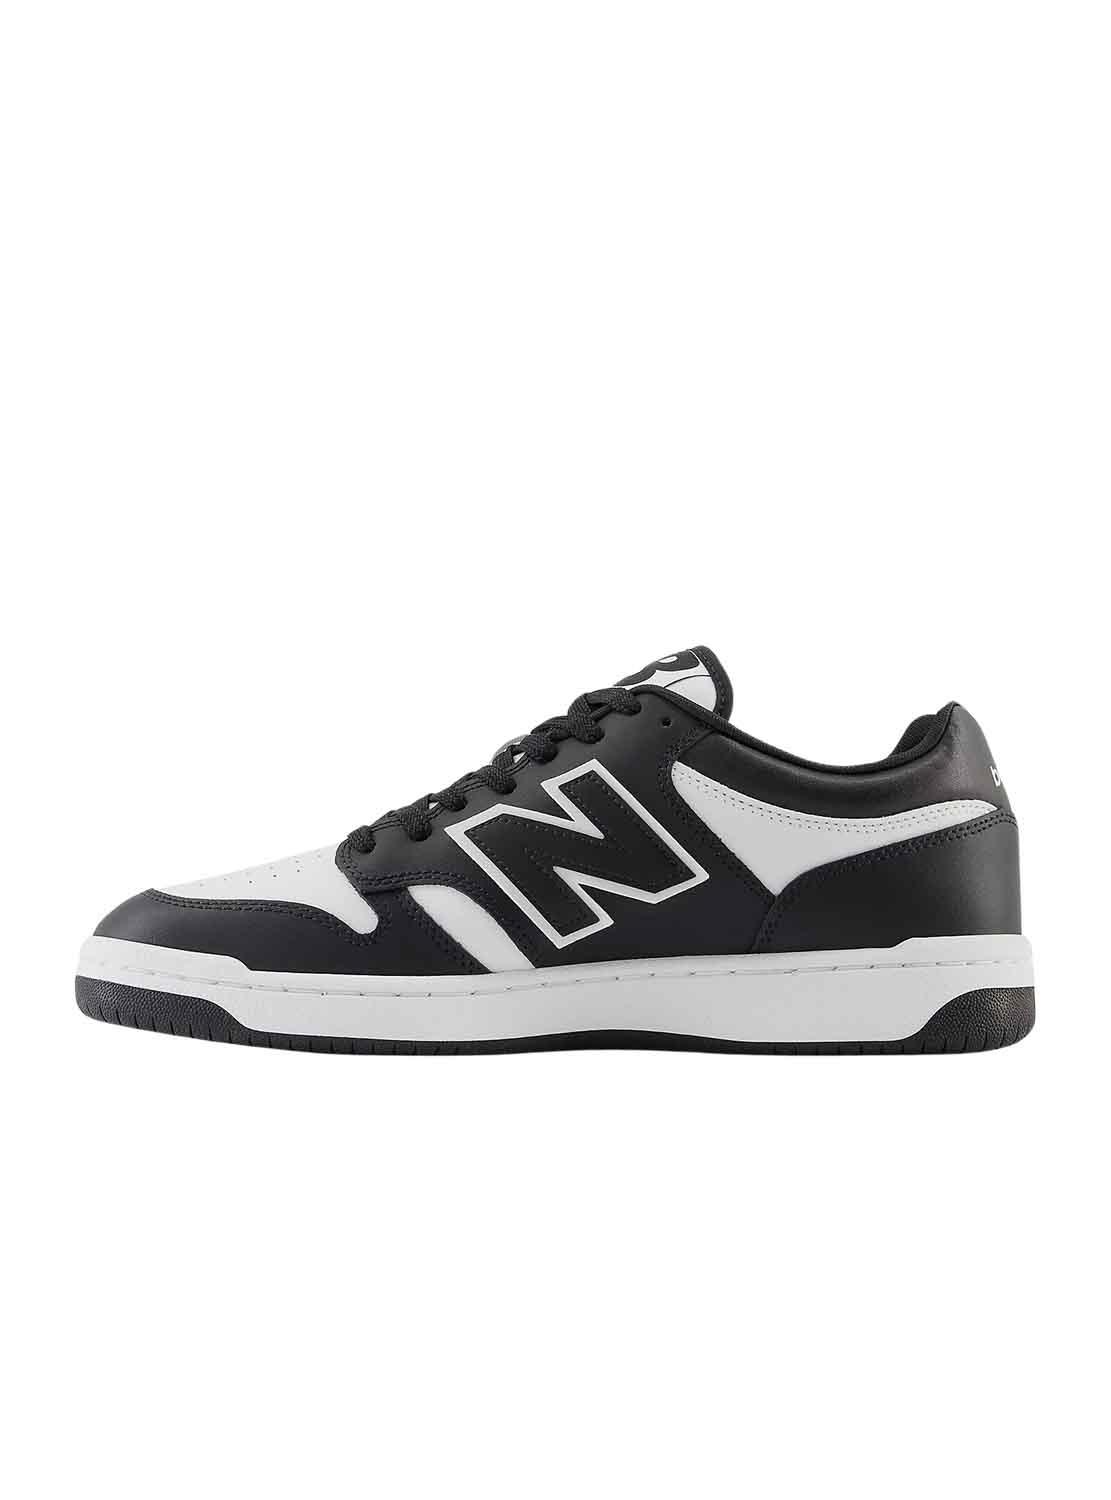 Sneakers New Balance BB480 Nero e Bianco